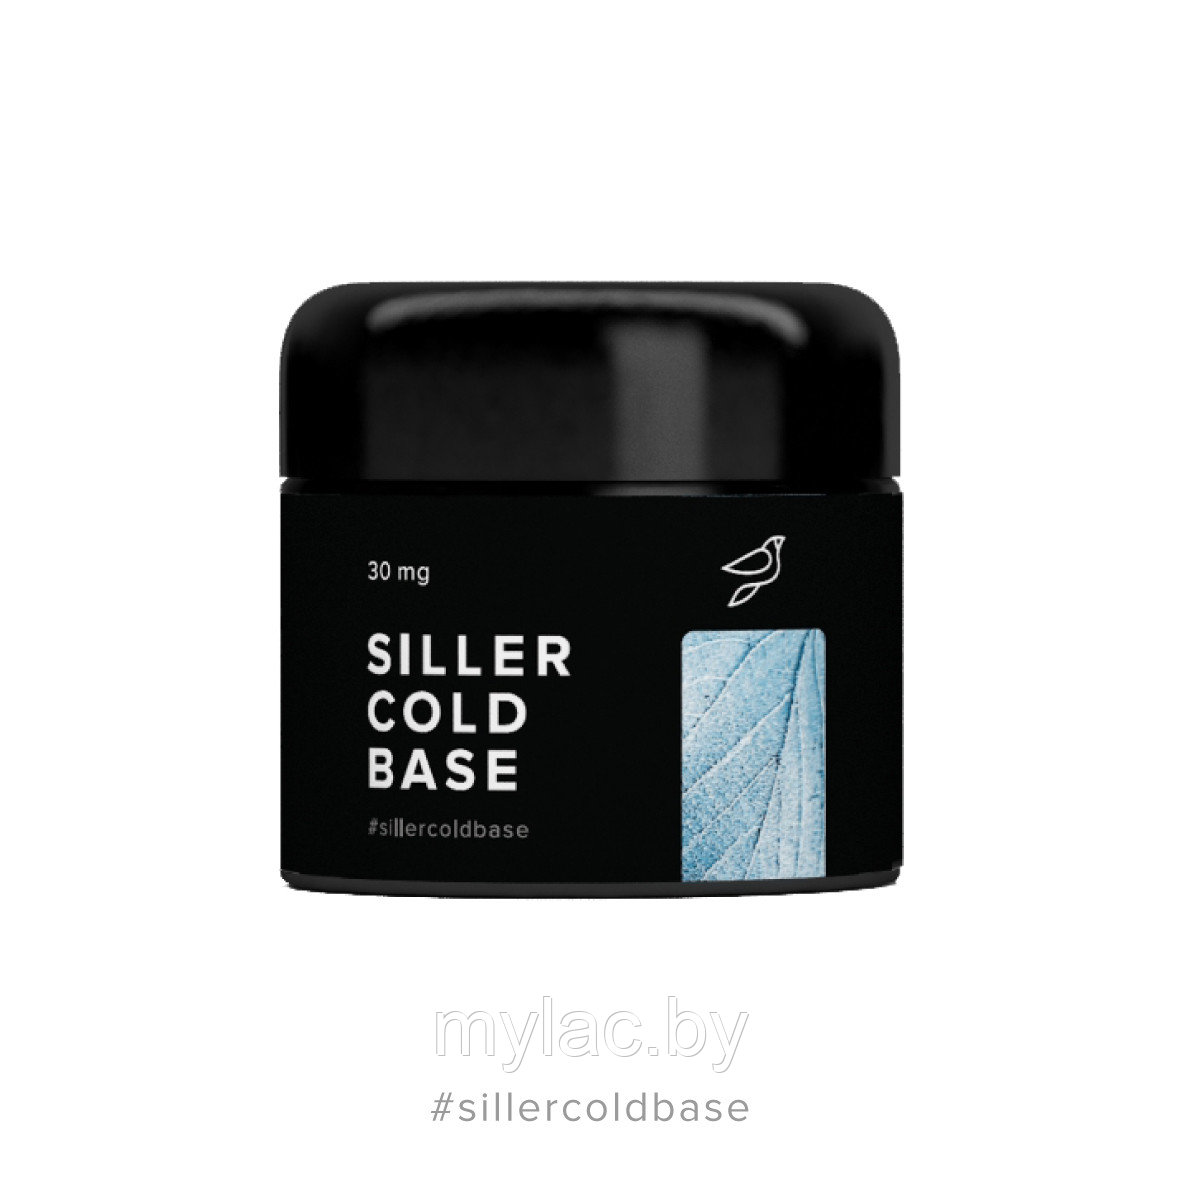 Siller Cold Base — холодная база для ногтей, 30мл